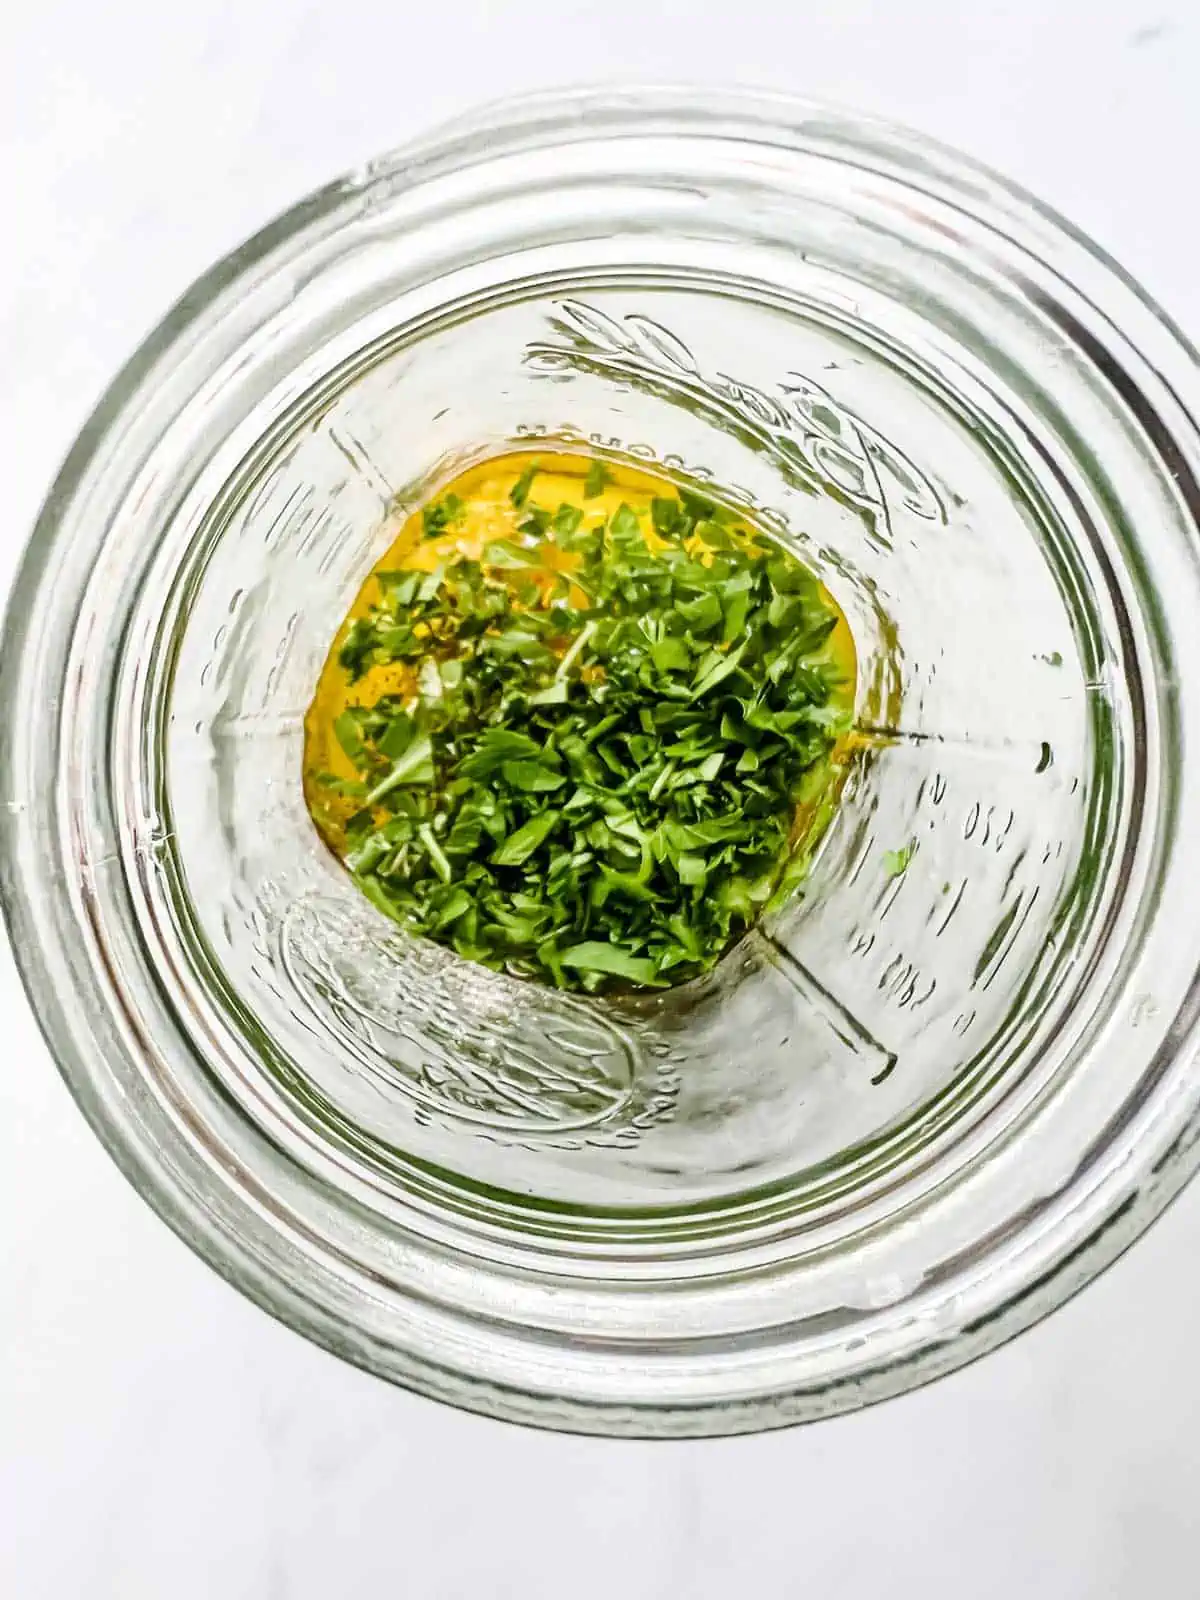 Salad dressing ingredients in a mason jar.